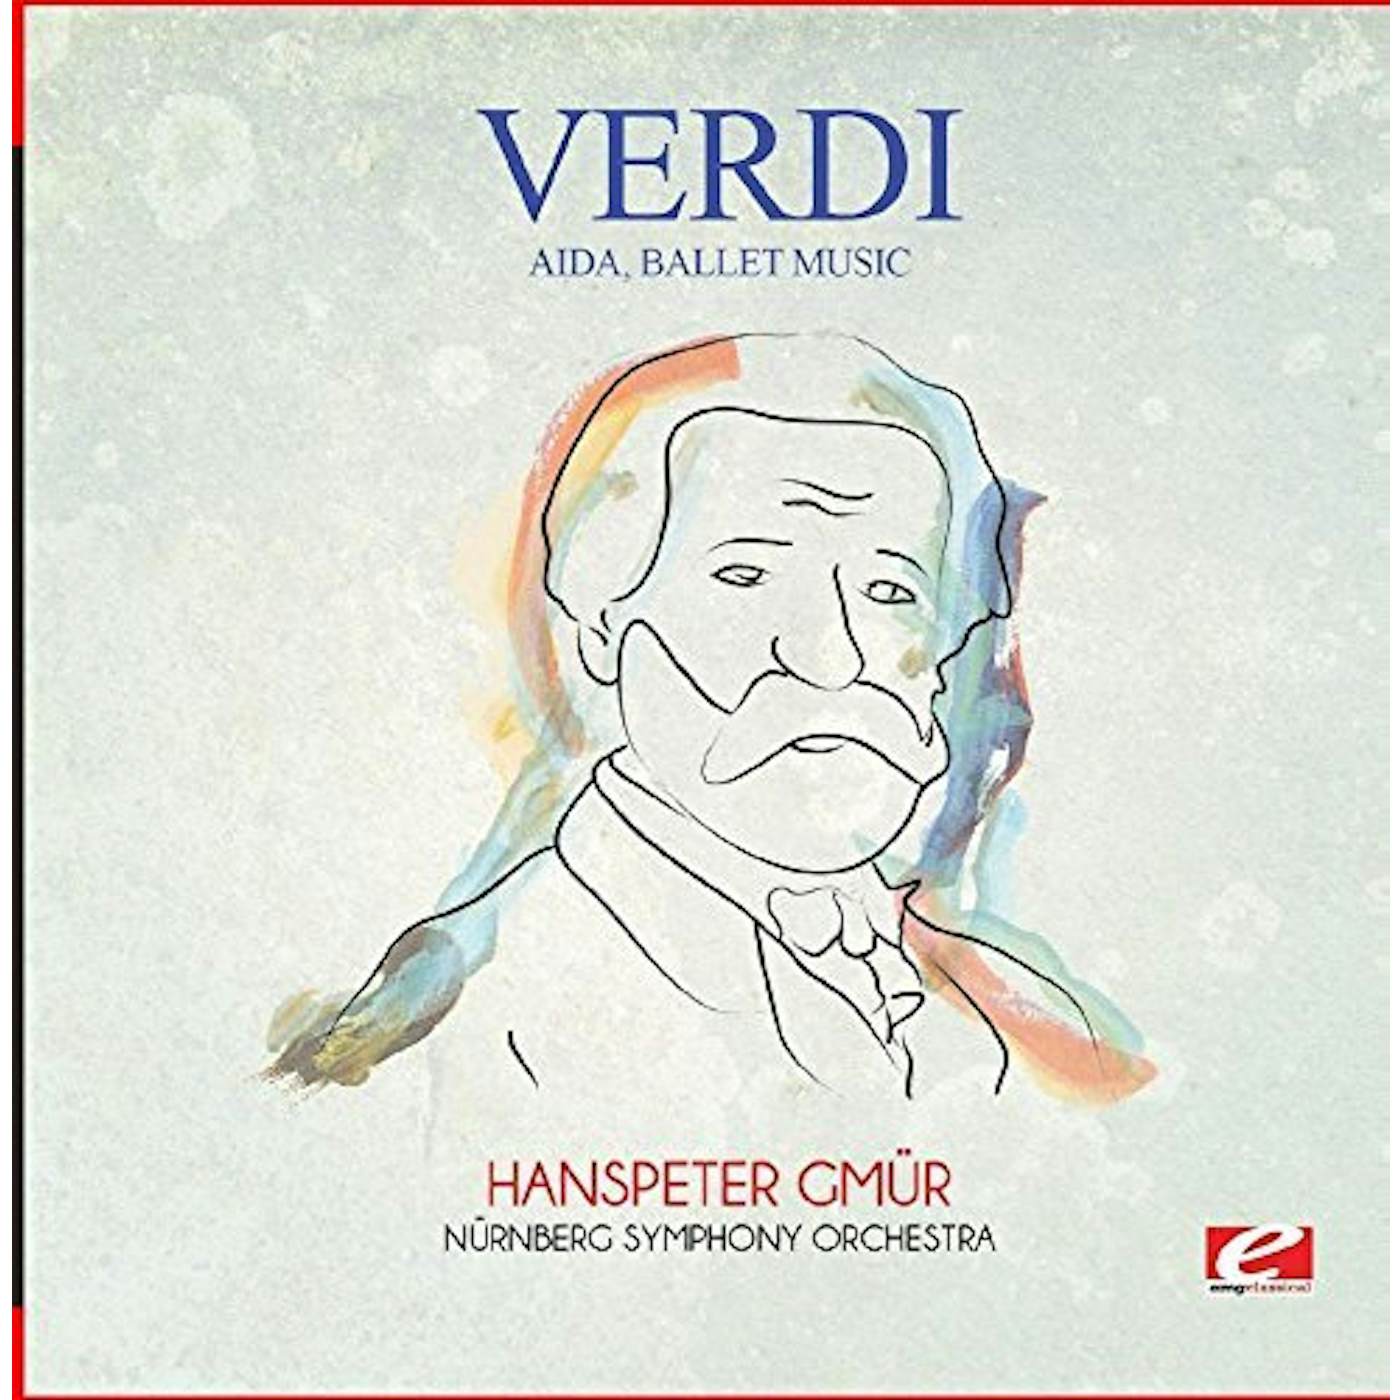 Verdi AIDA BALLET MUSIC CD